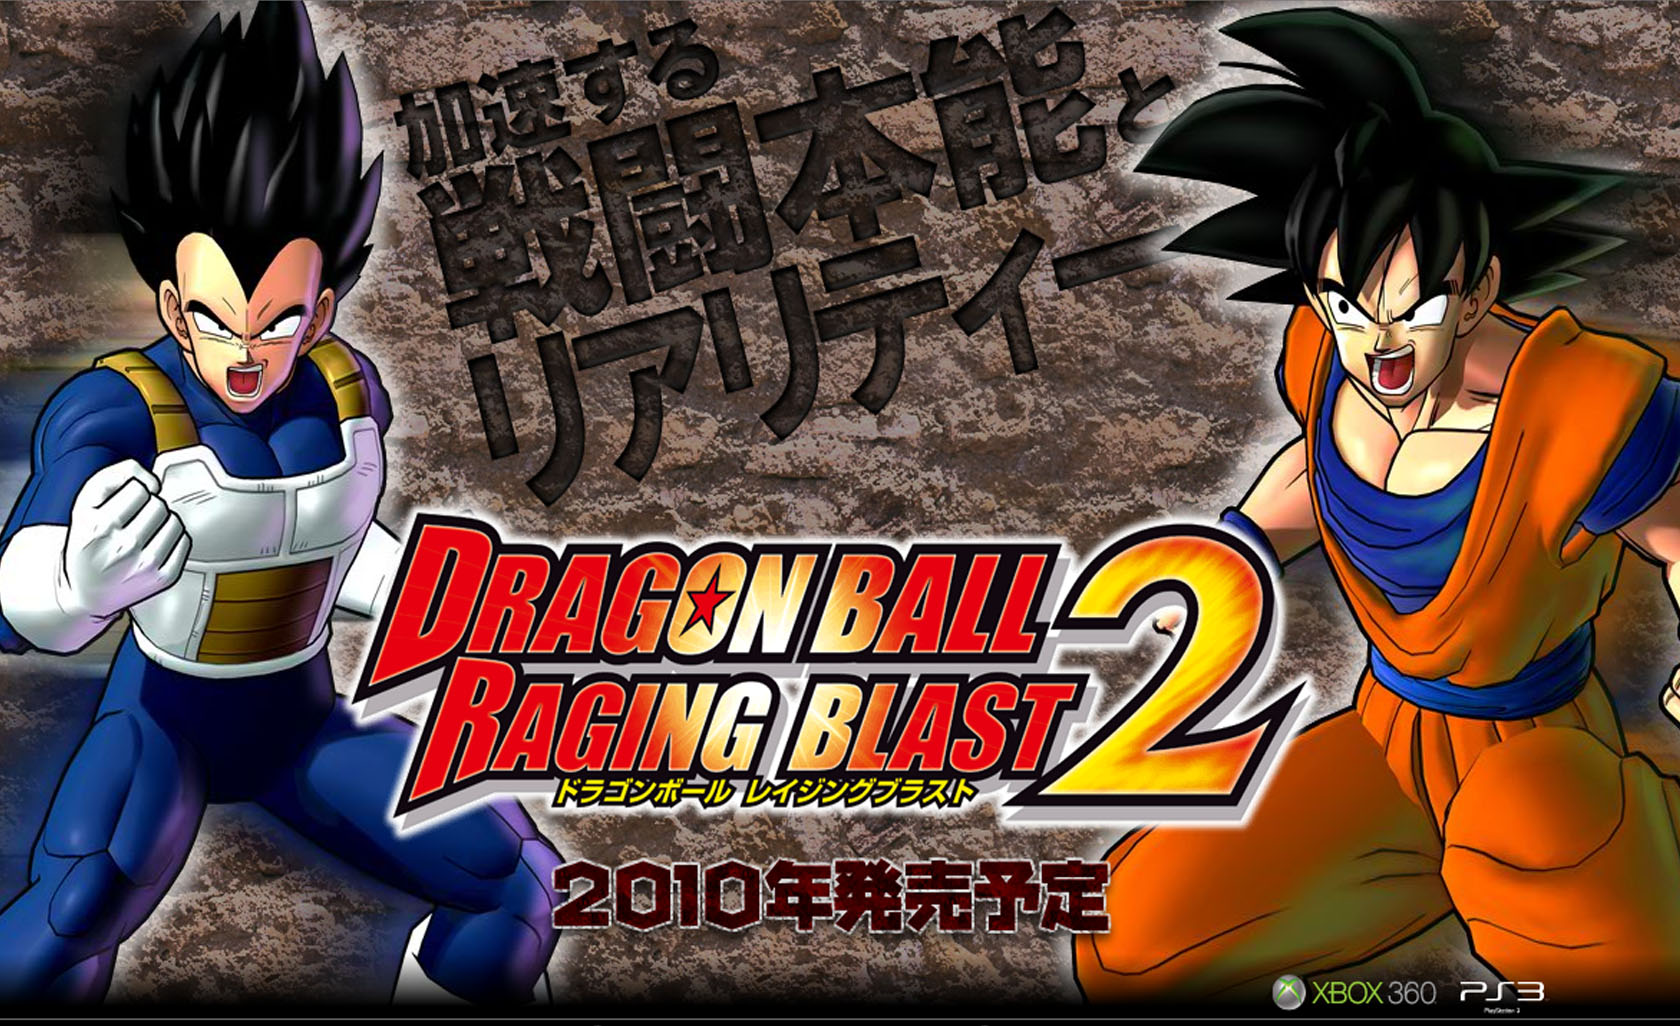 Dragon Ball Raging Blast Pc Download